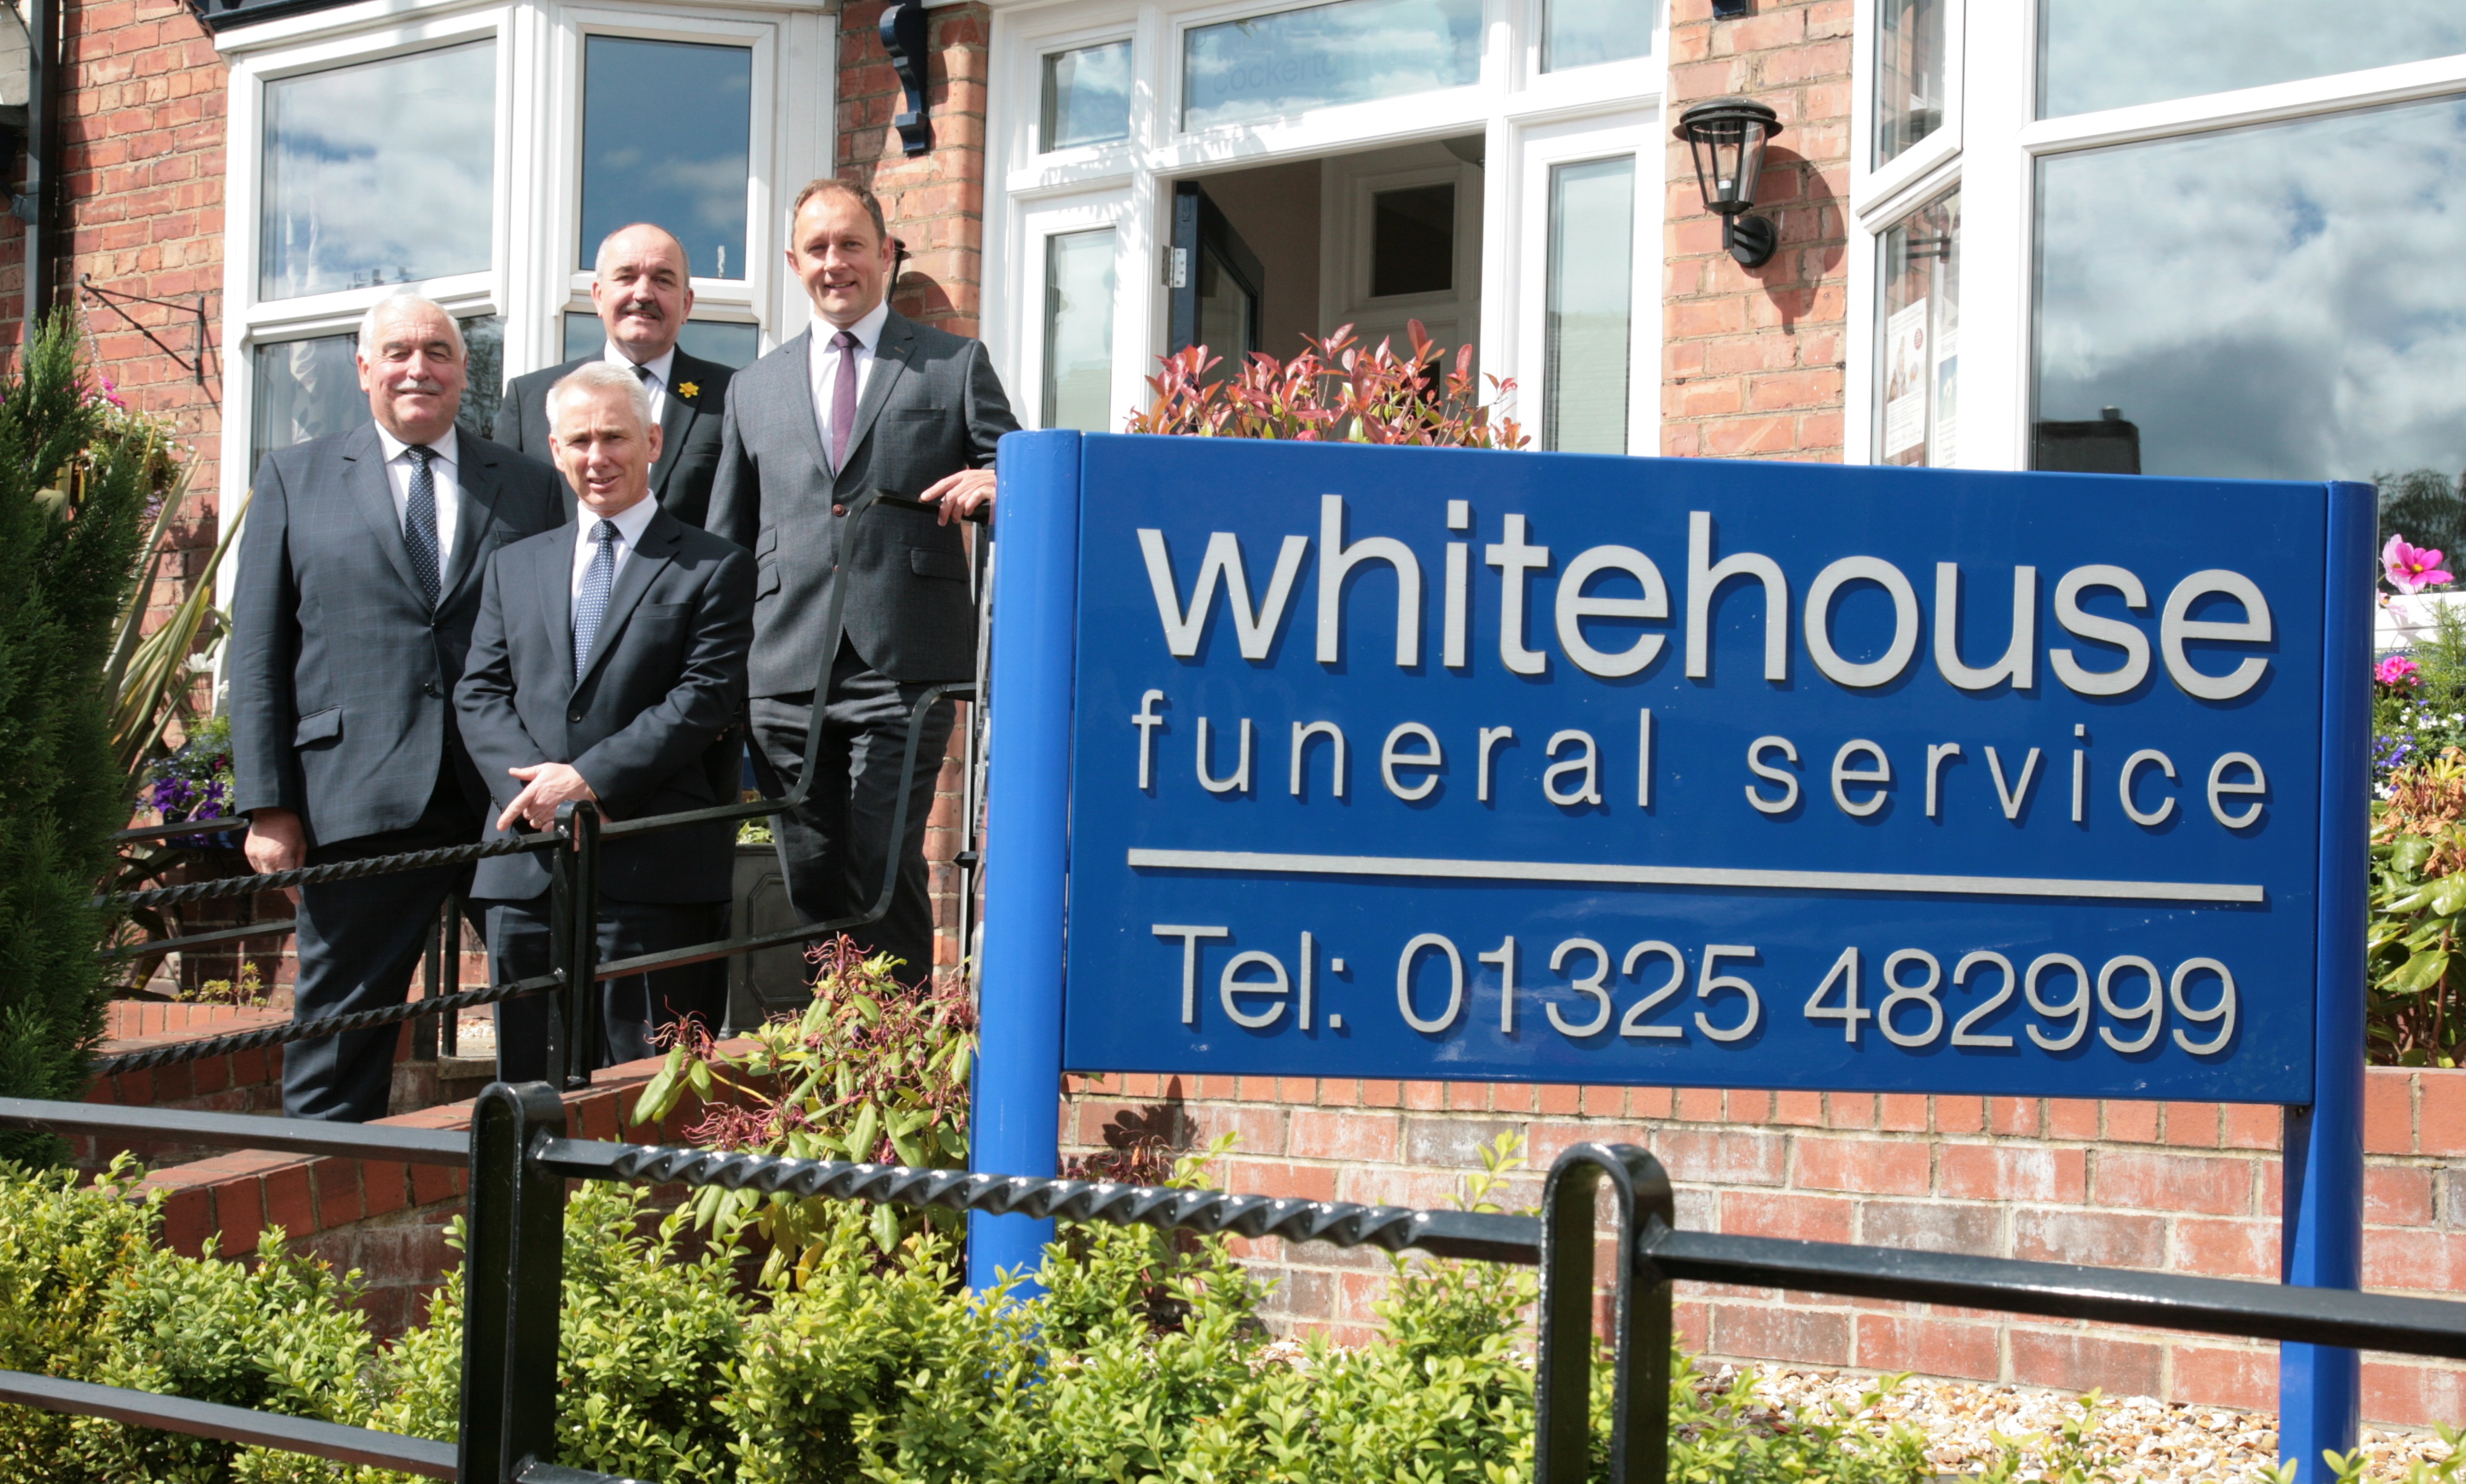 Funeral Directors front